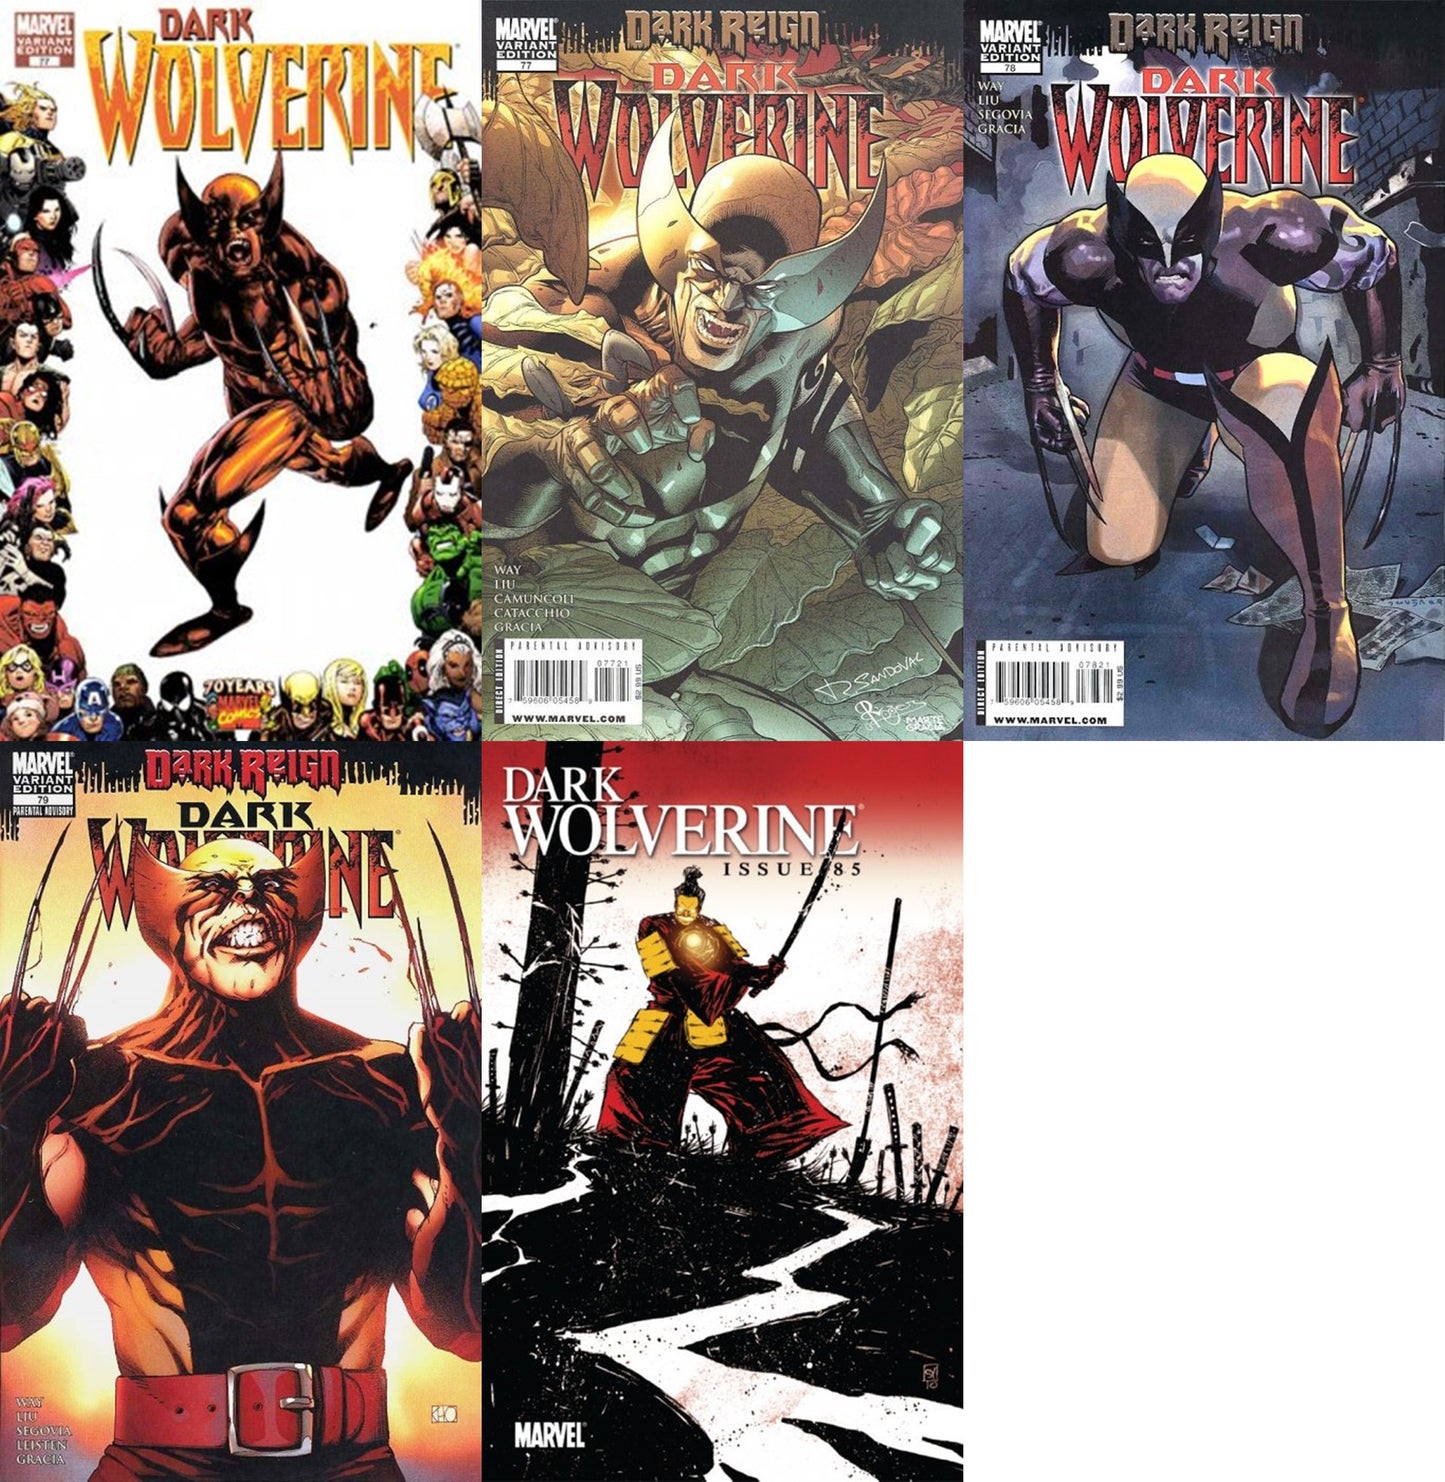 Dark Wolverine #77-79 & #85 Incentive Variants (2009-2010) Marvel - 5 Comics